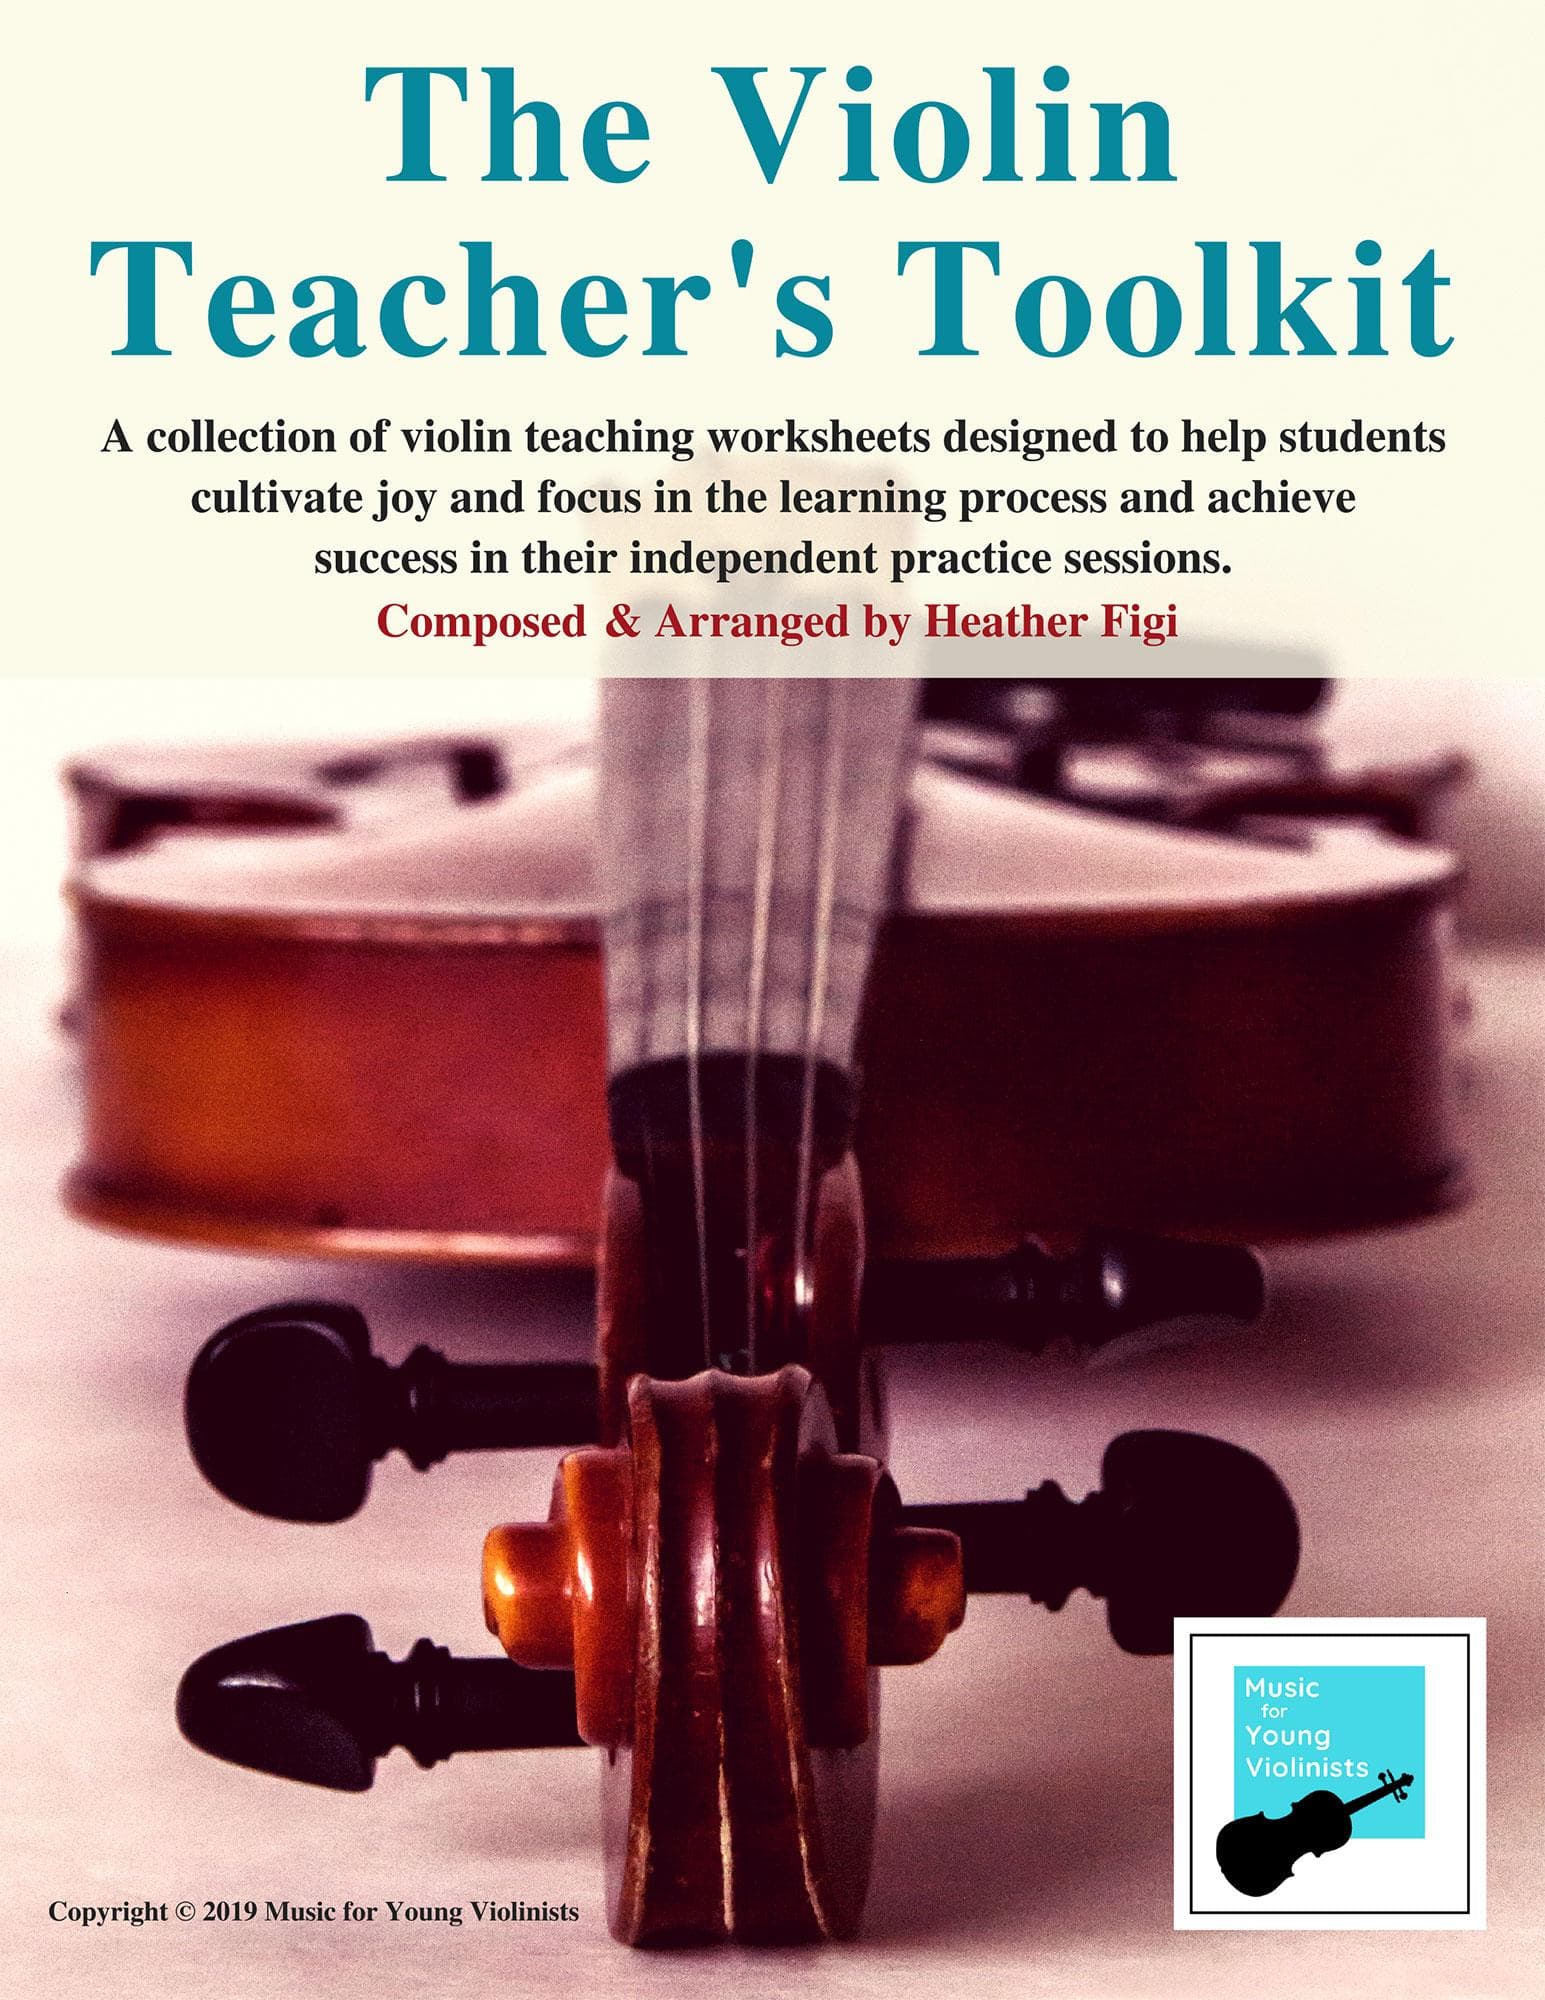 Figi, Heather - The Violin Teacher's Toolkit  - Digital Download